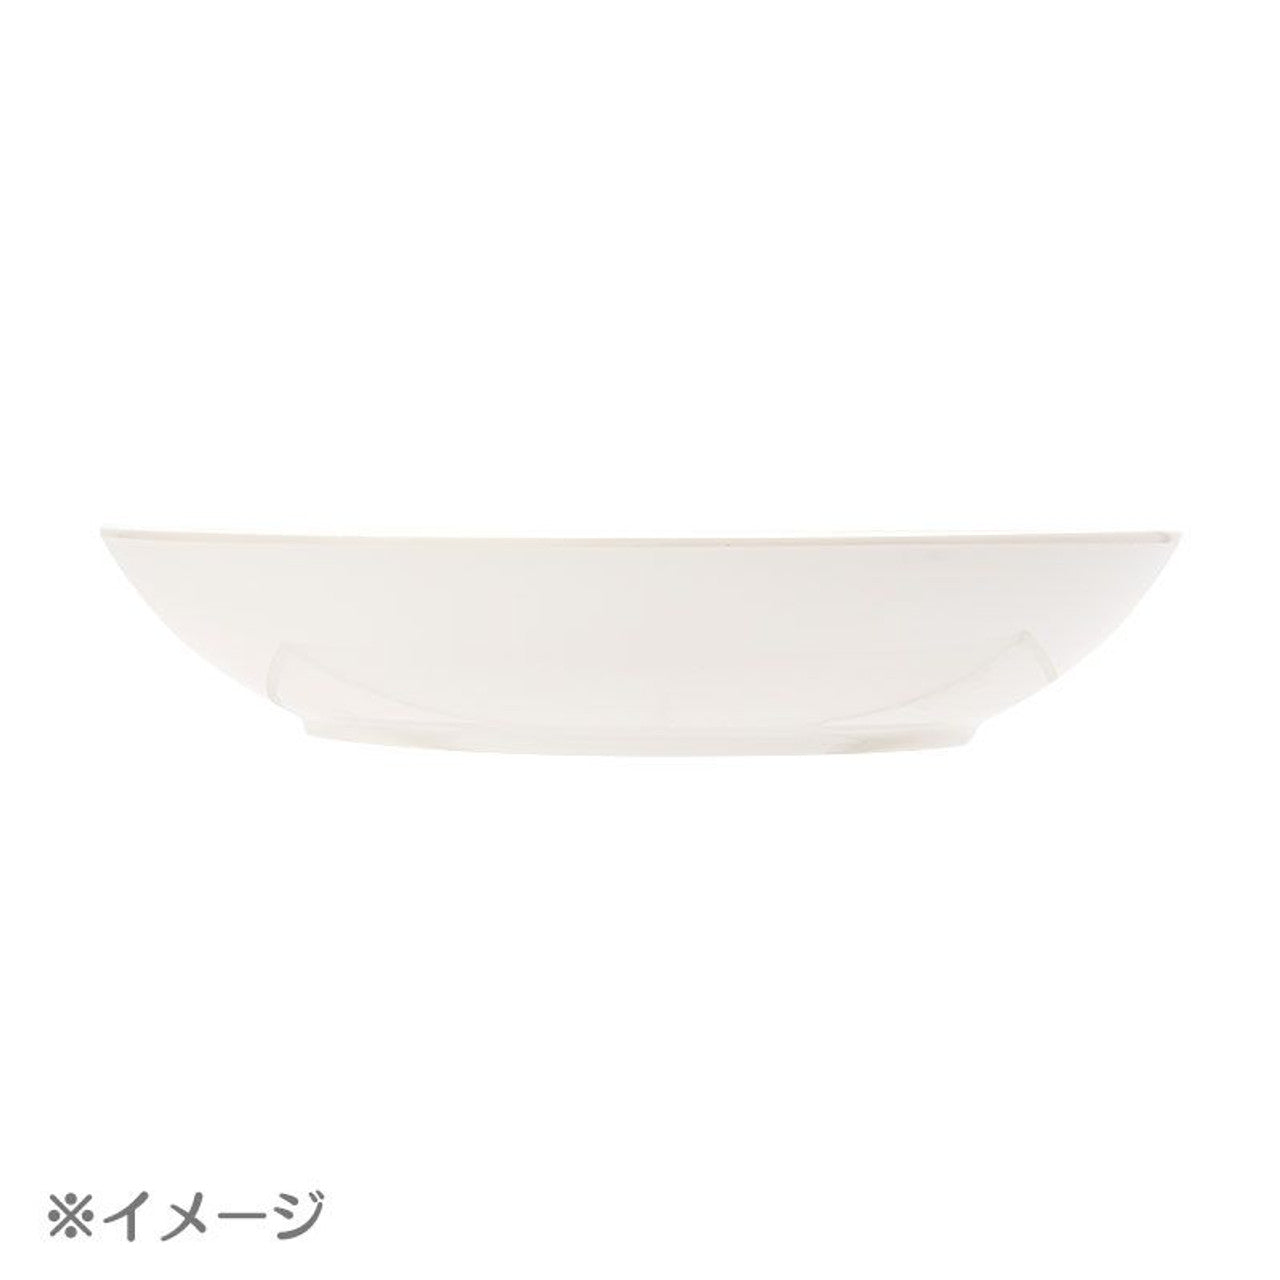 Sanrio My Melody Melamine Curry & Pasta Dish (83652-4)